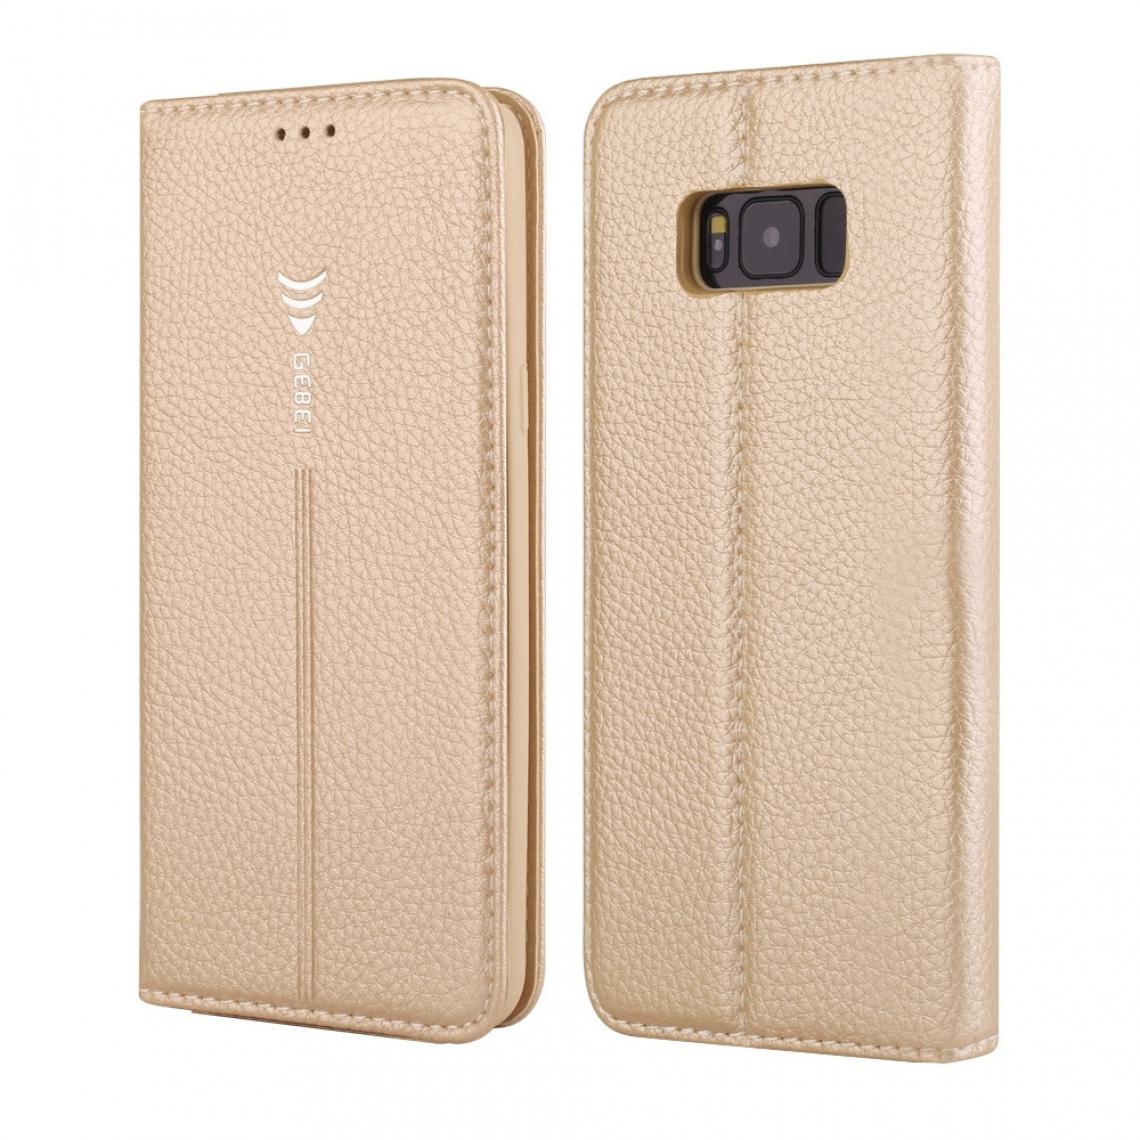 Wewoo - Housse Coque Pour Galaxy S8 Etui de protection rabattable horizontal avec support et fentes cartes GEBEI PU + TPU Or - Coque, étui smartphone